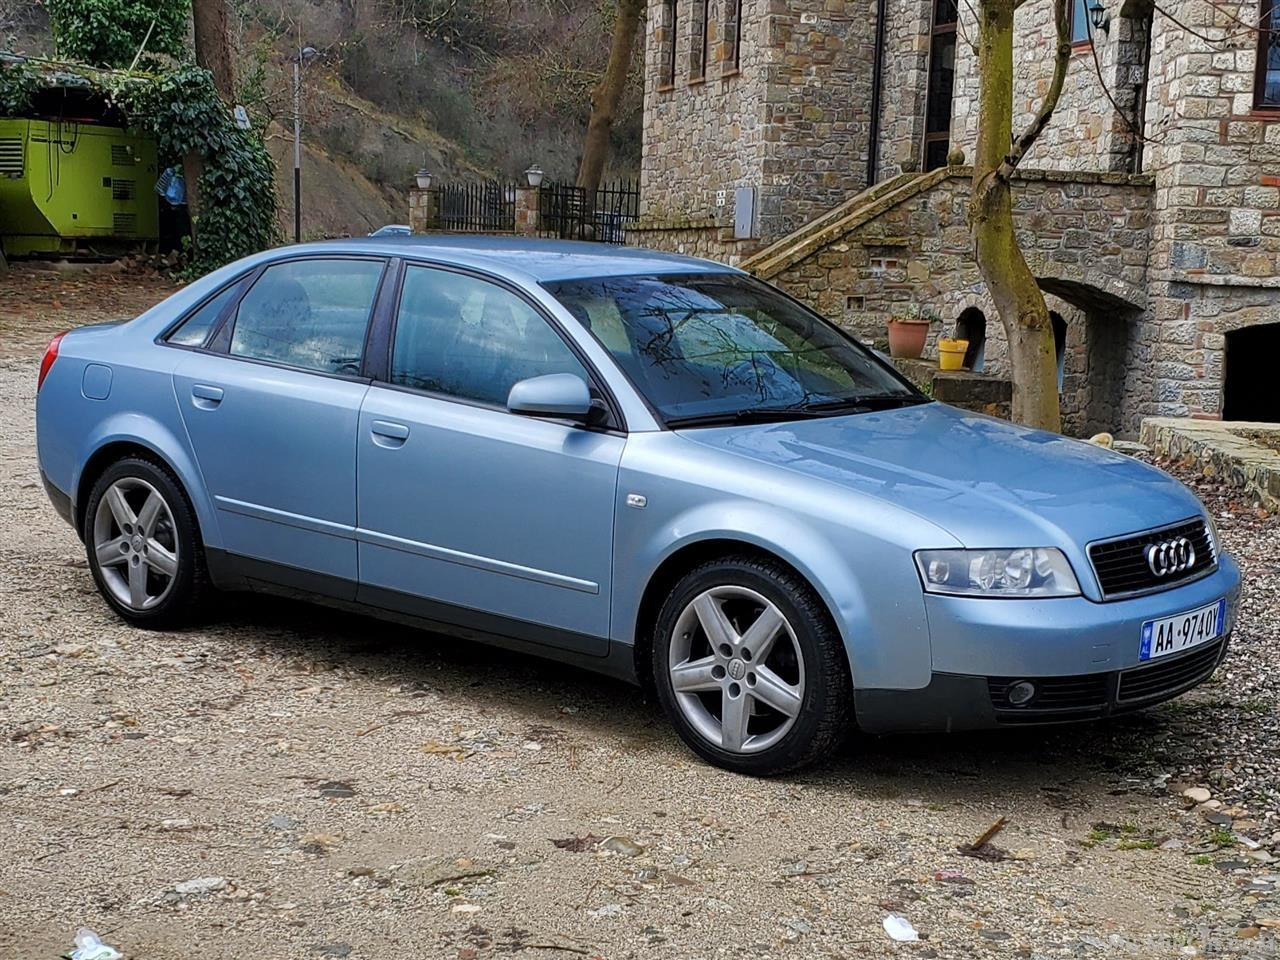 Audi A4 2.0 Benzin_Gaz 2004